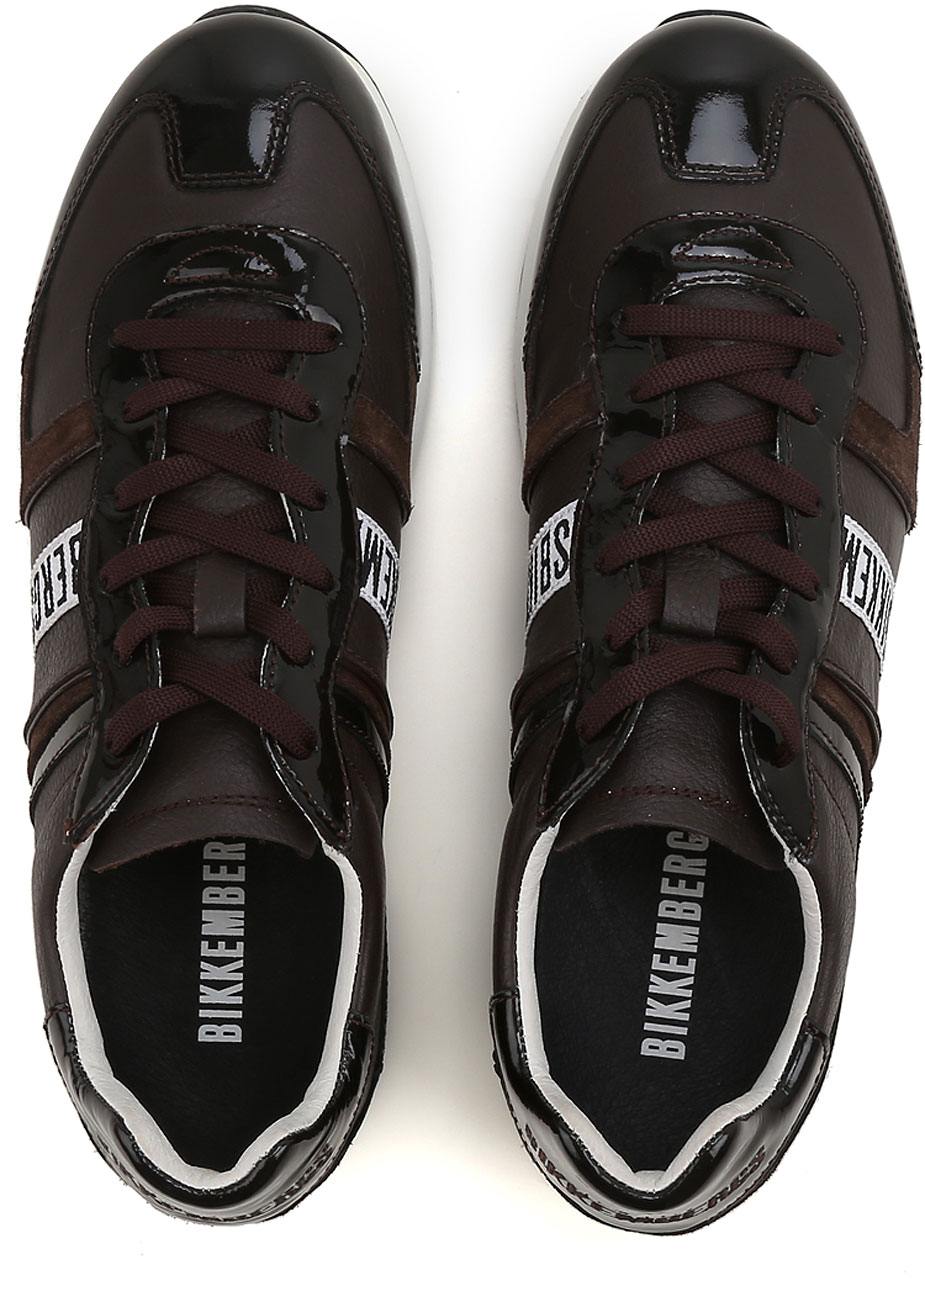 Mens Shoes Bikkembergs, Style code: bke104205--